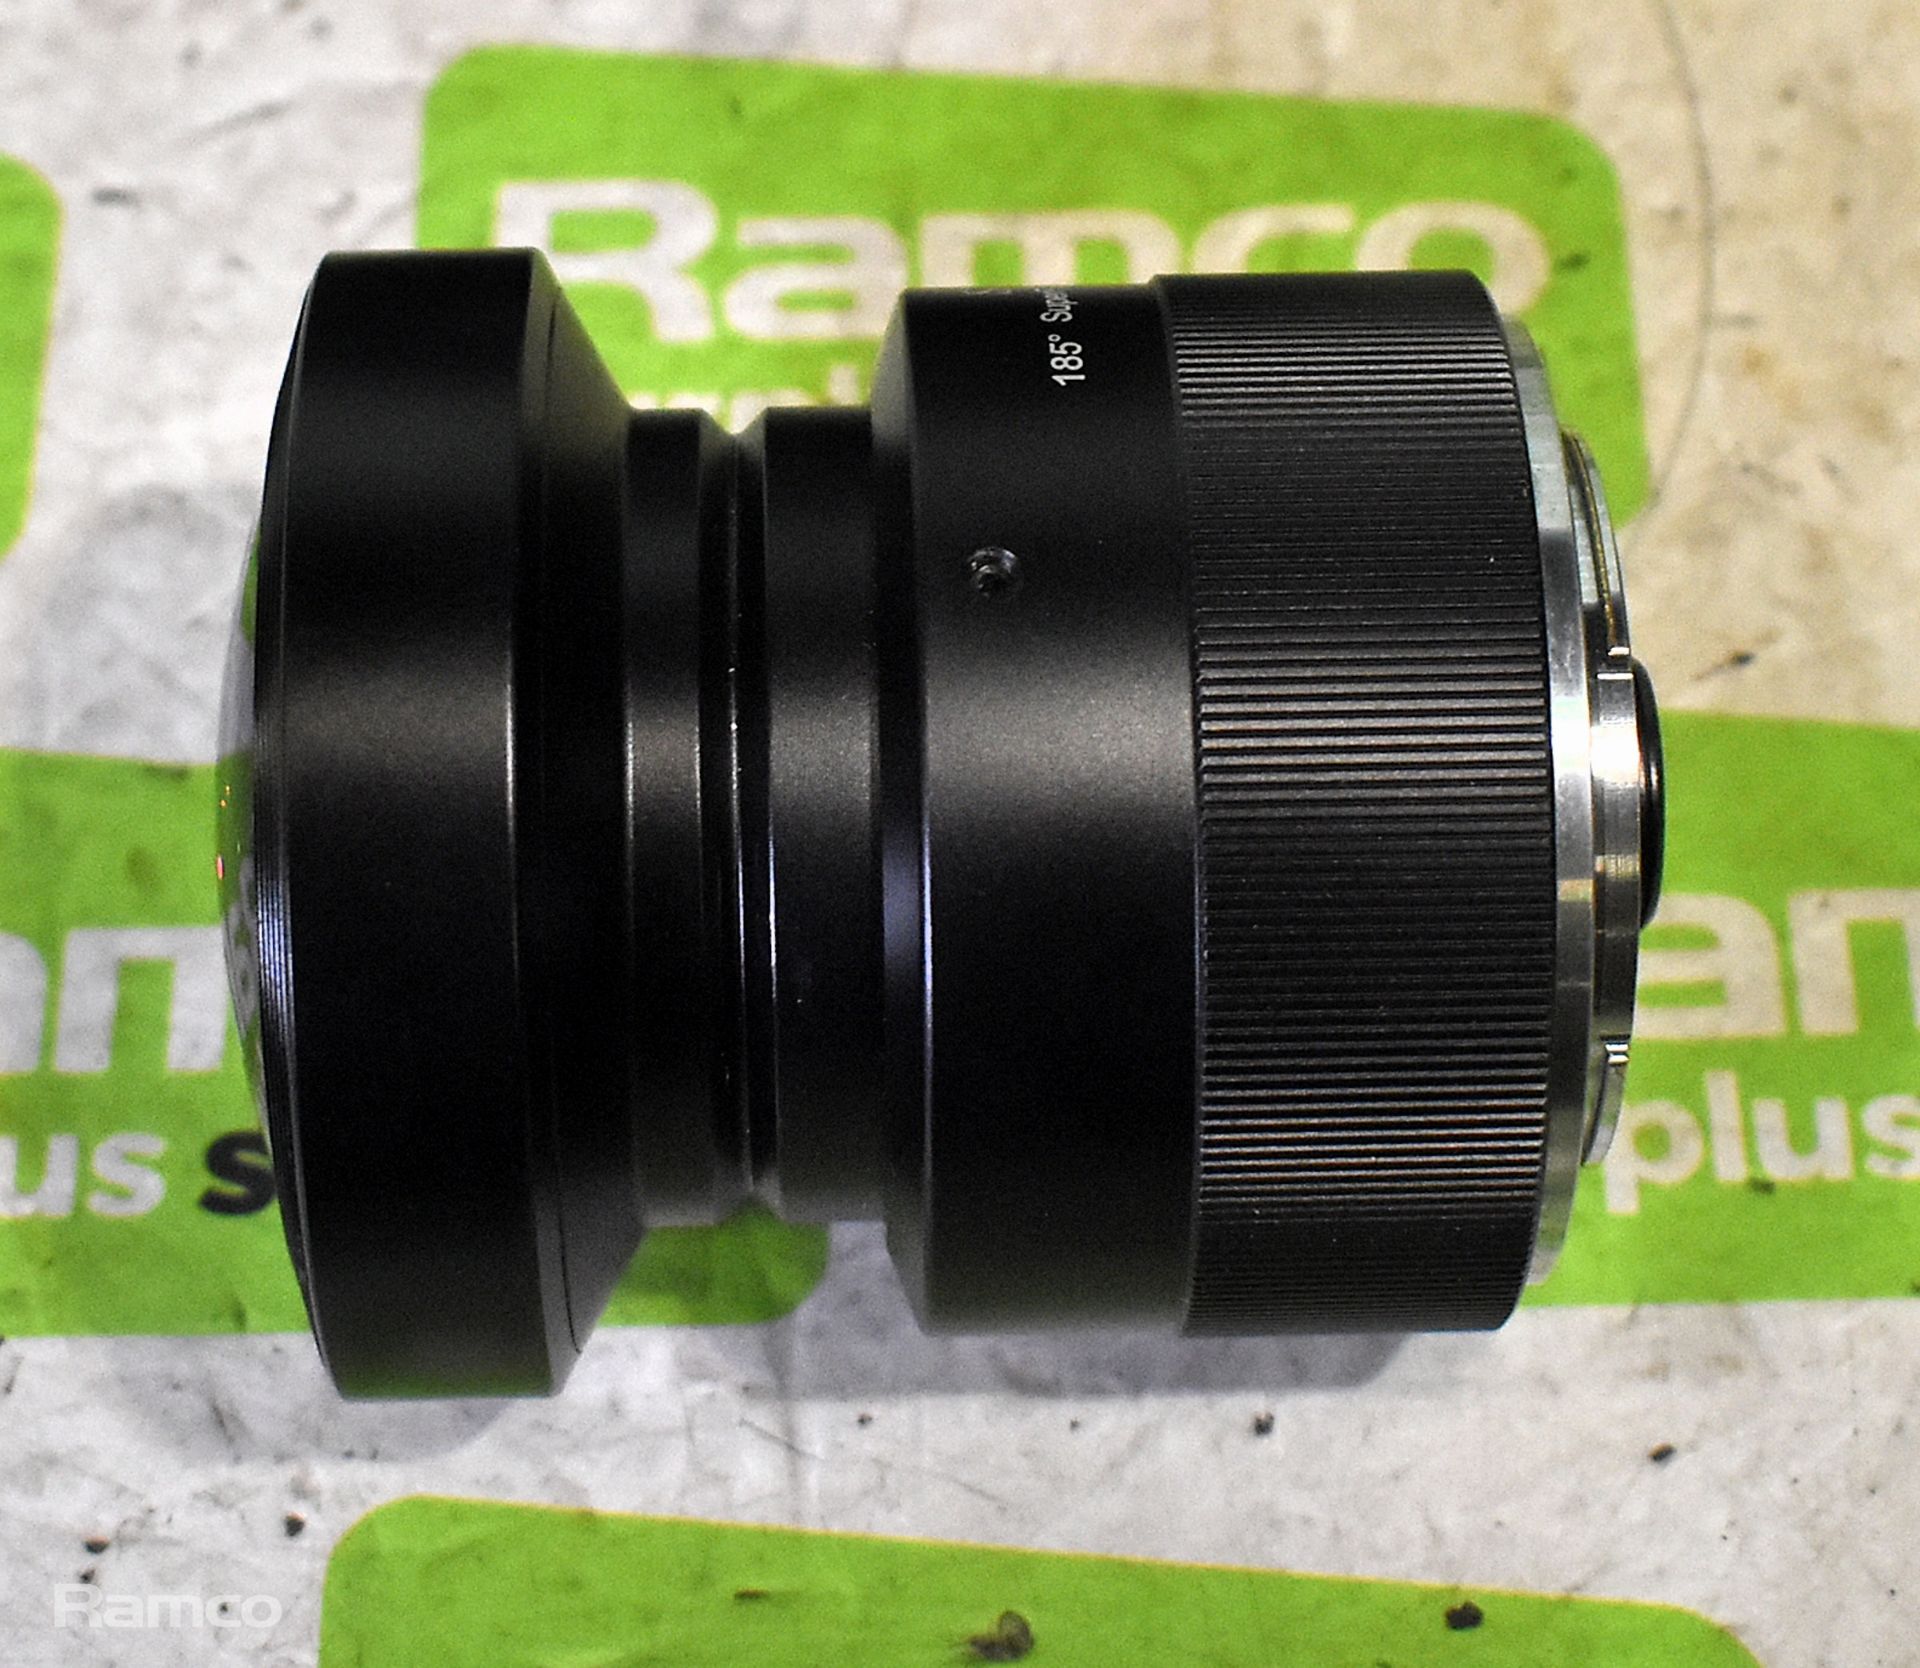 Sunex 5.6mm Superfisheye lens - Image 2 of 5